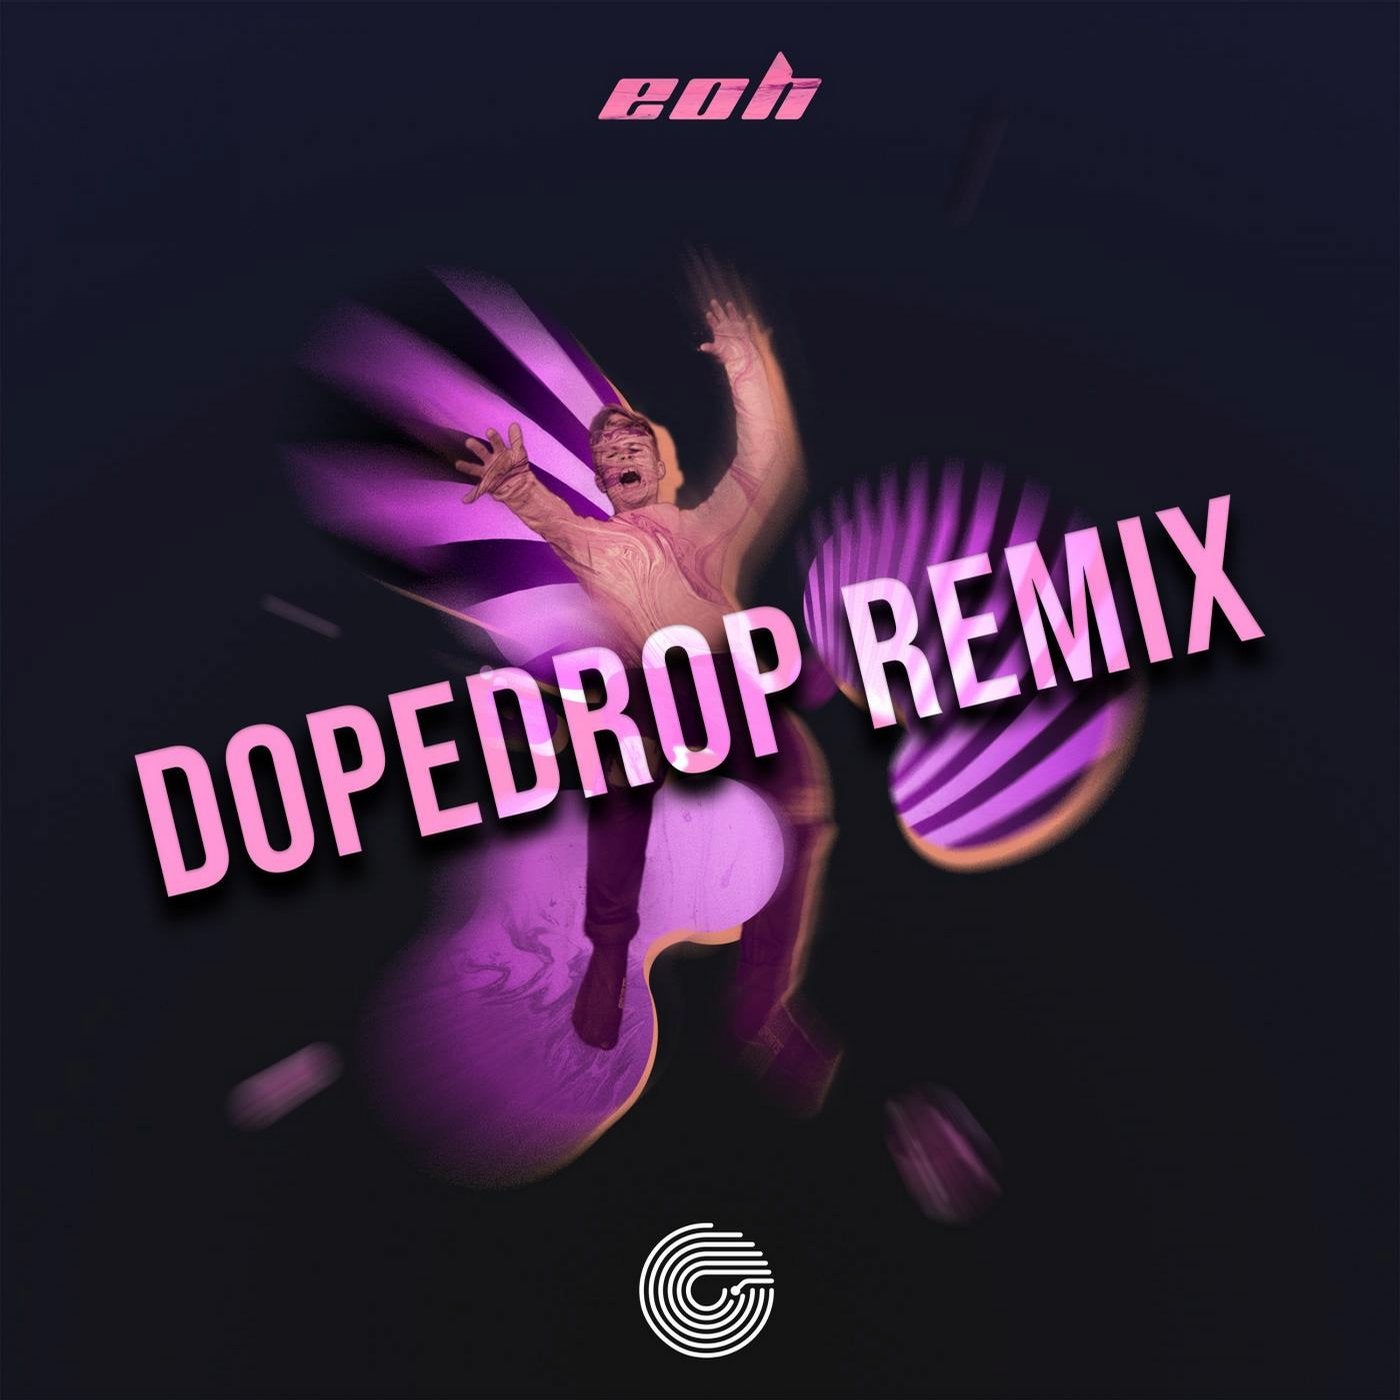 eoh (DOPEDROP Remix)